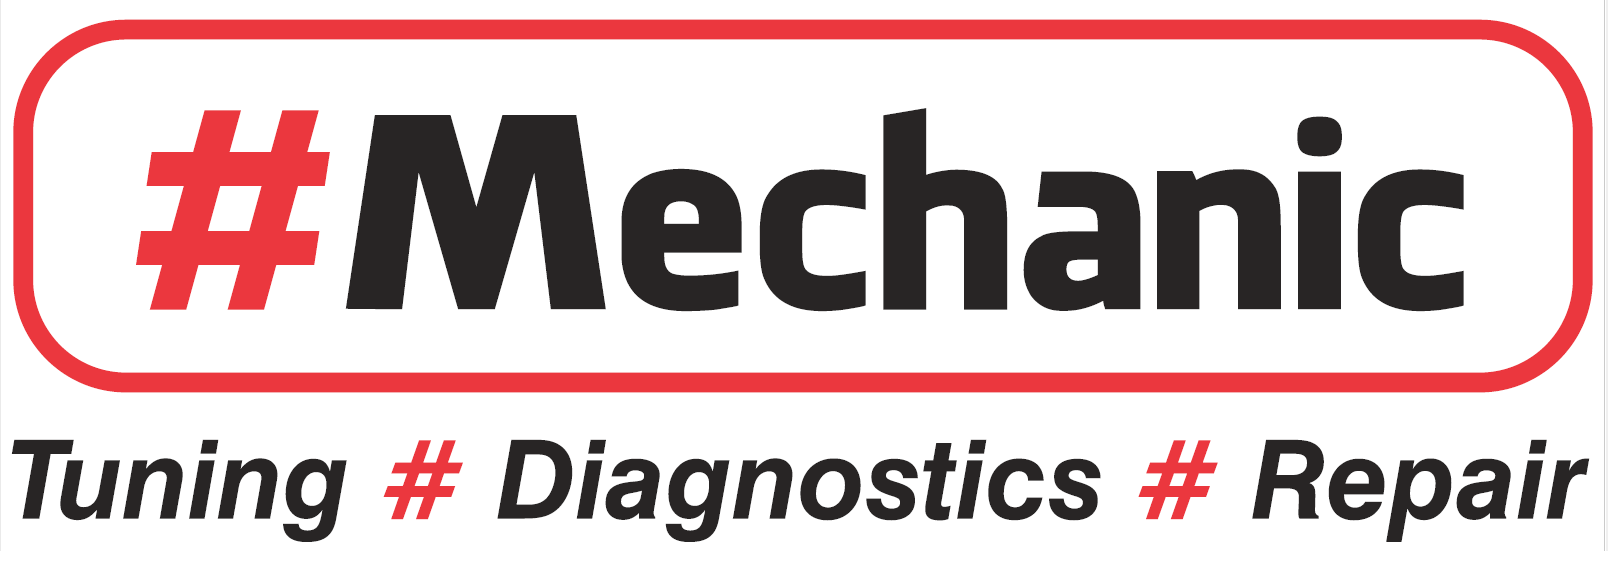 Hashtag Mechanic LTD logo